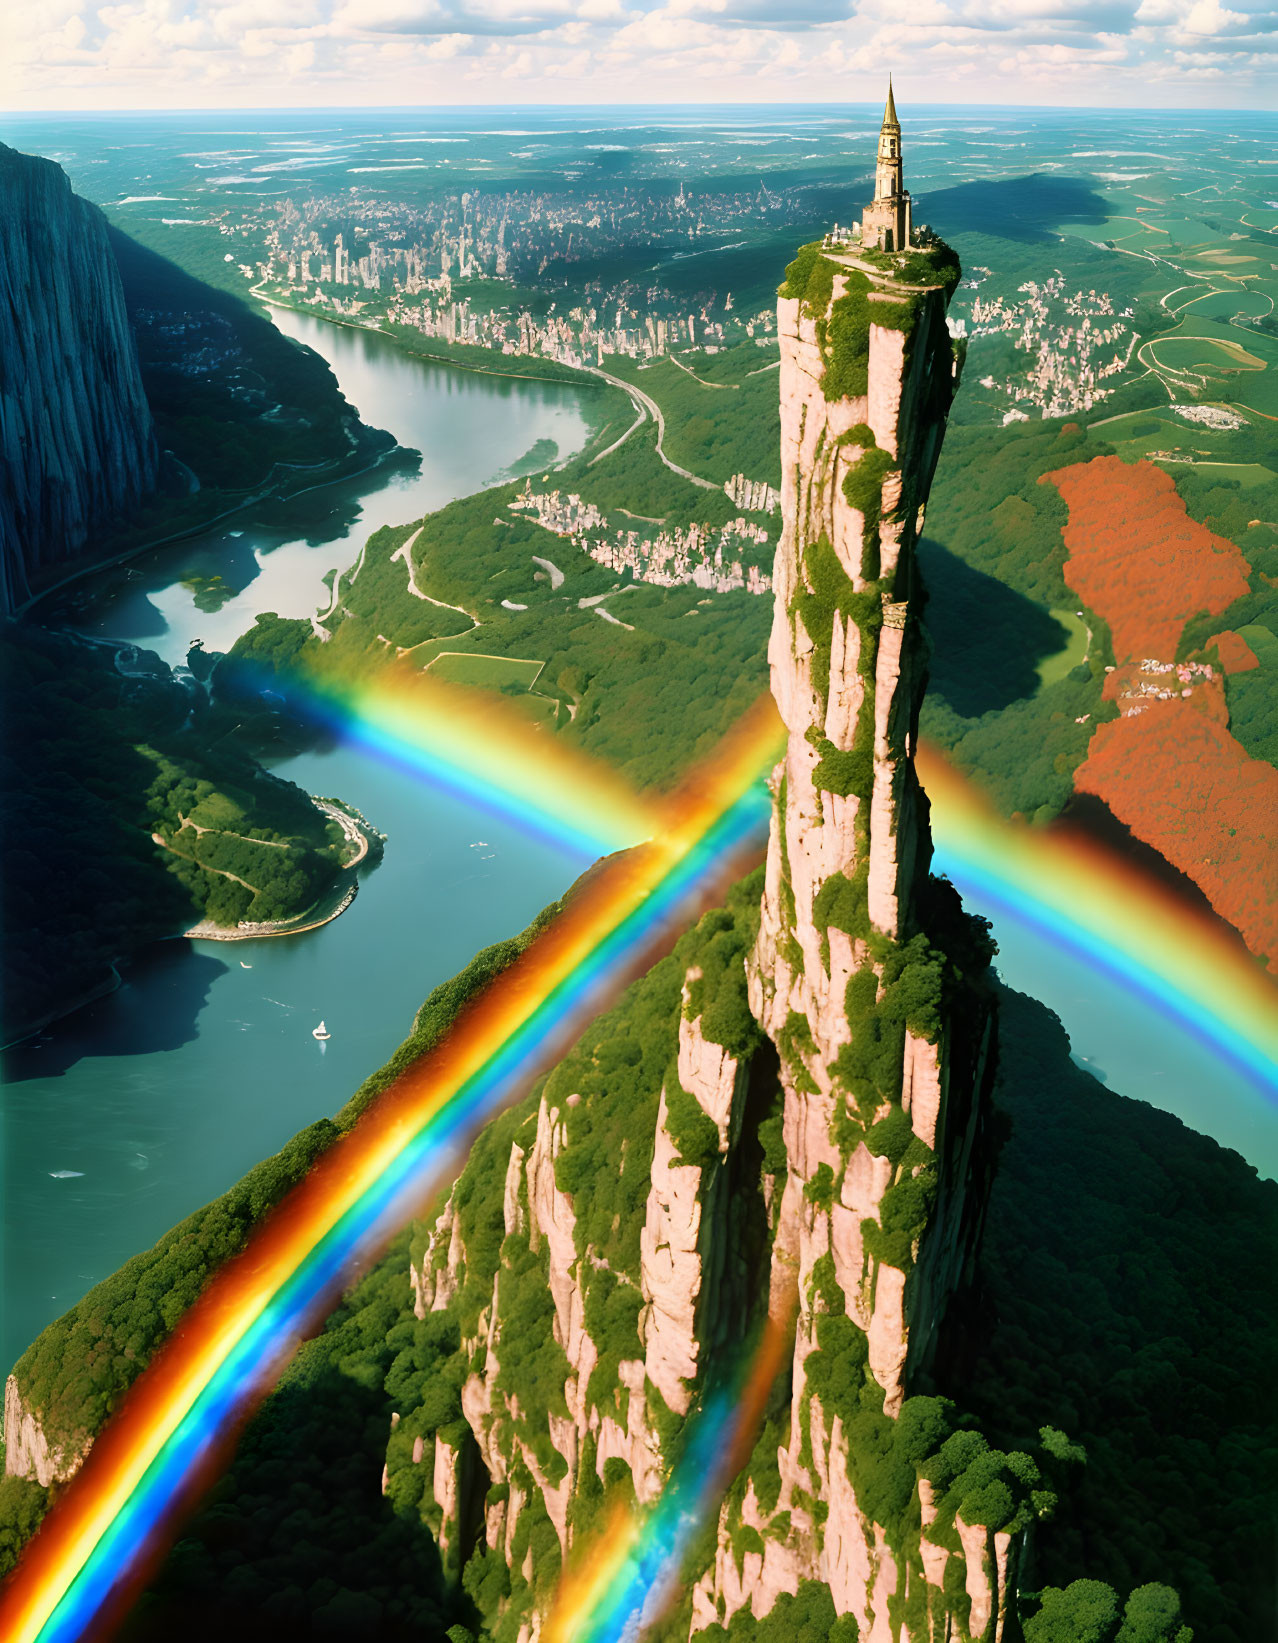 Majestic tower on narrow rock pillar with rainbow bridge over lush landscapes